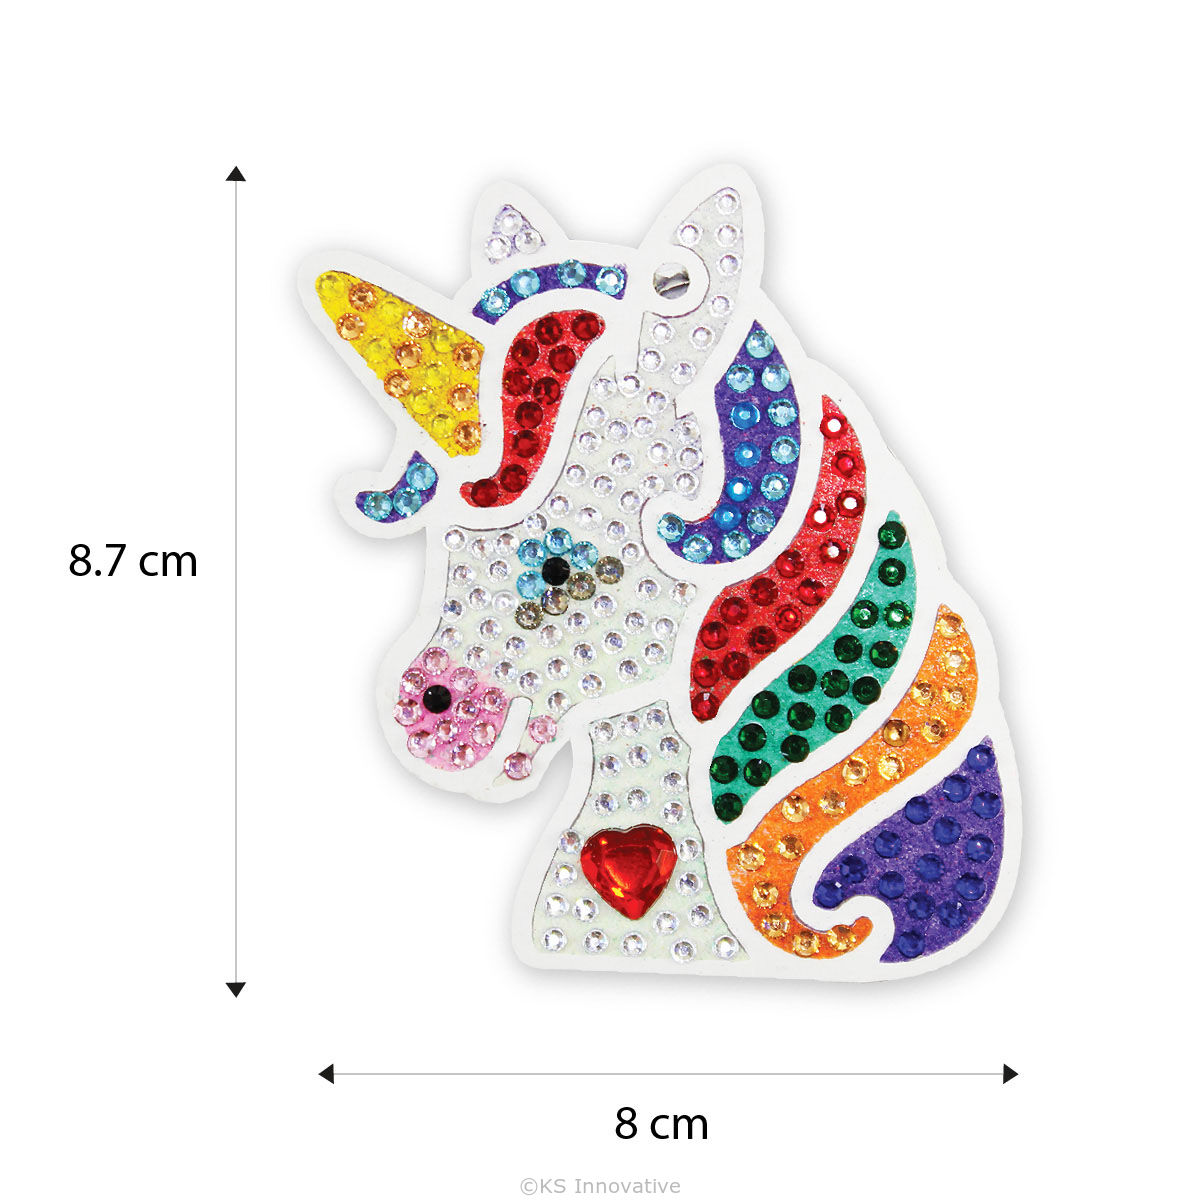 Diamond Art - Butterfly Keychain